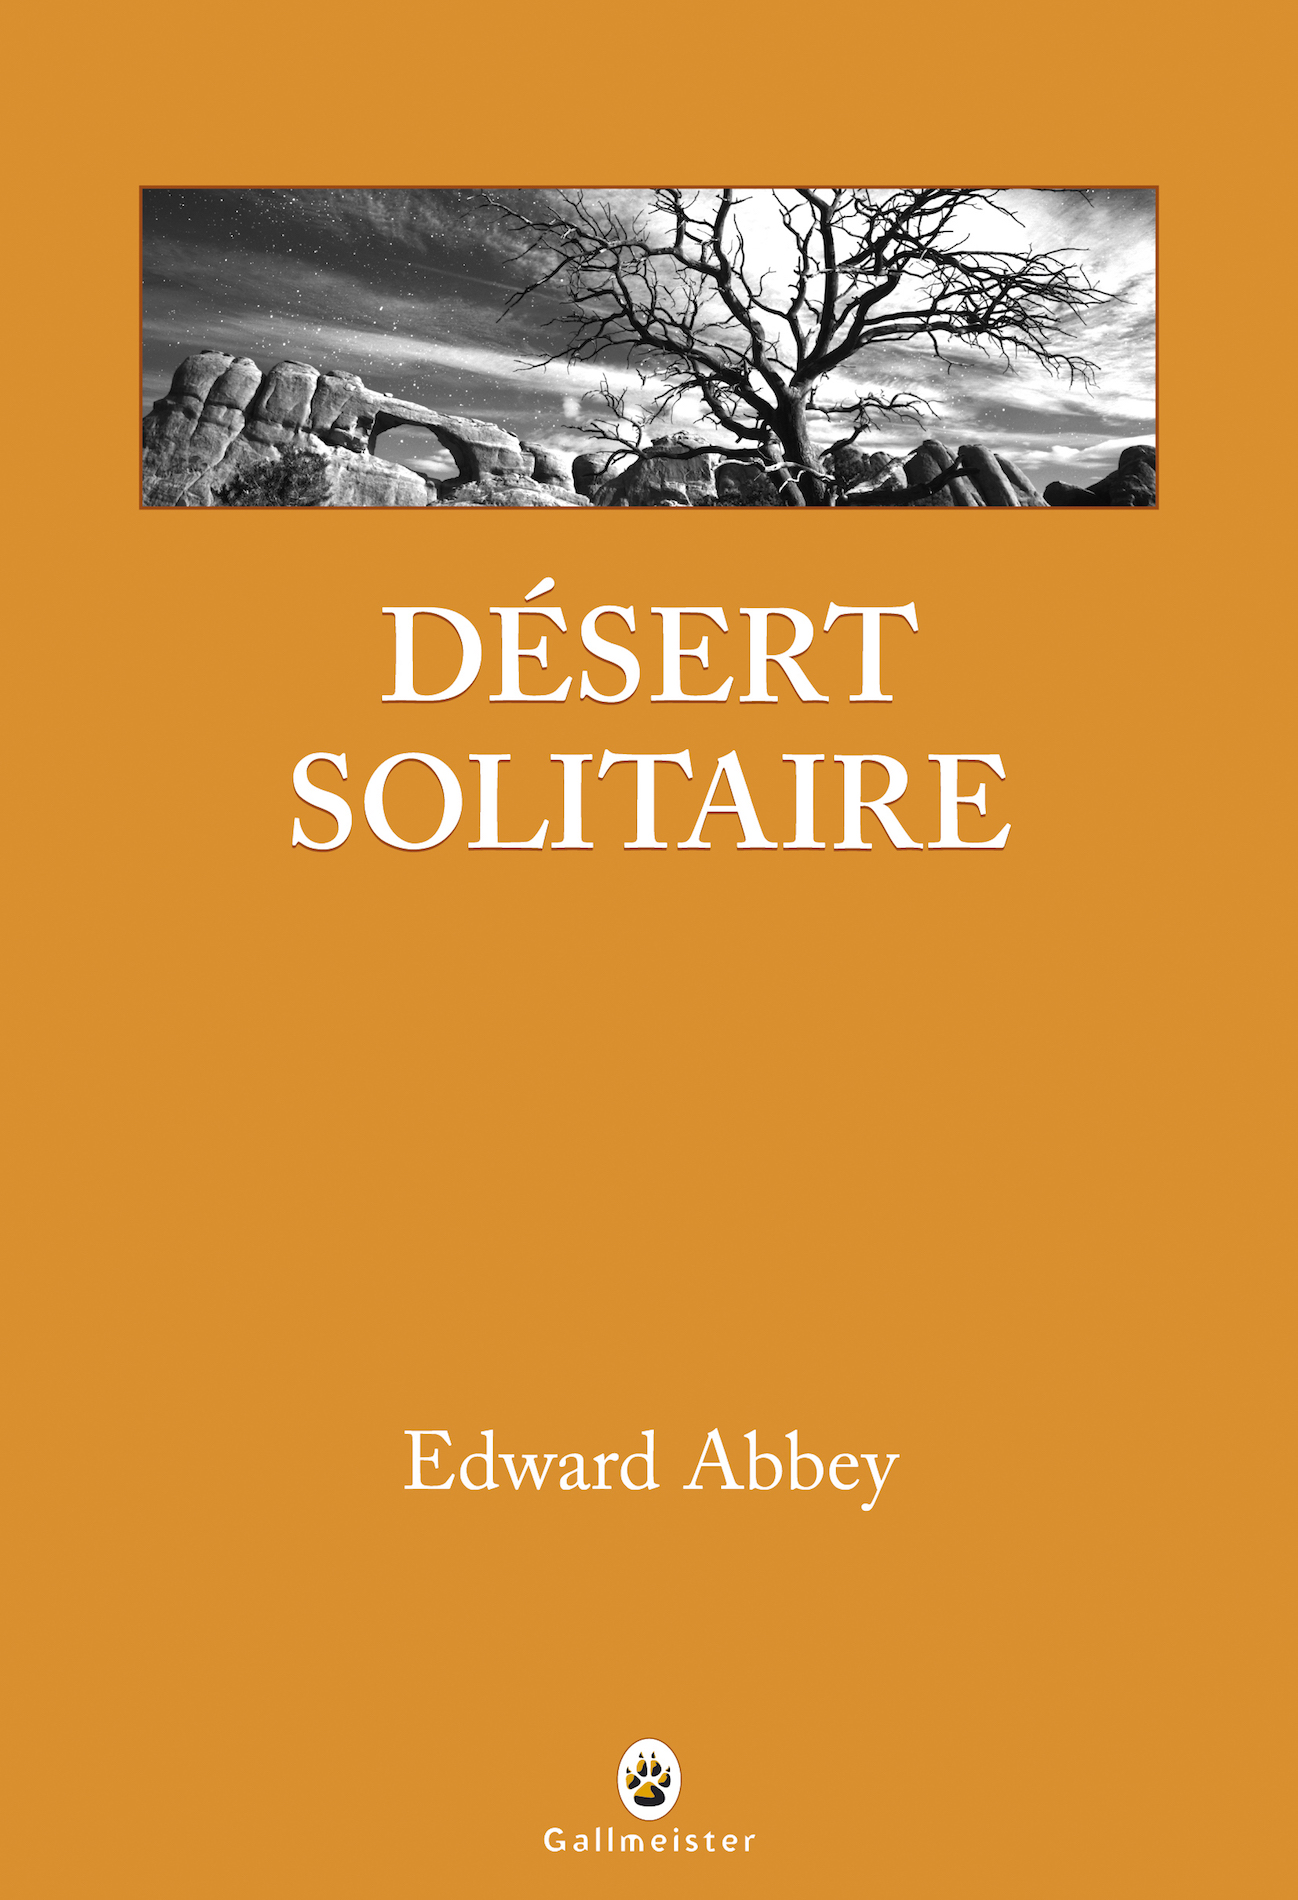 Desert solitaire pdf Abbey Edward